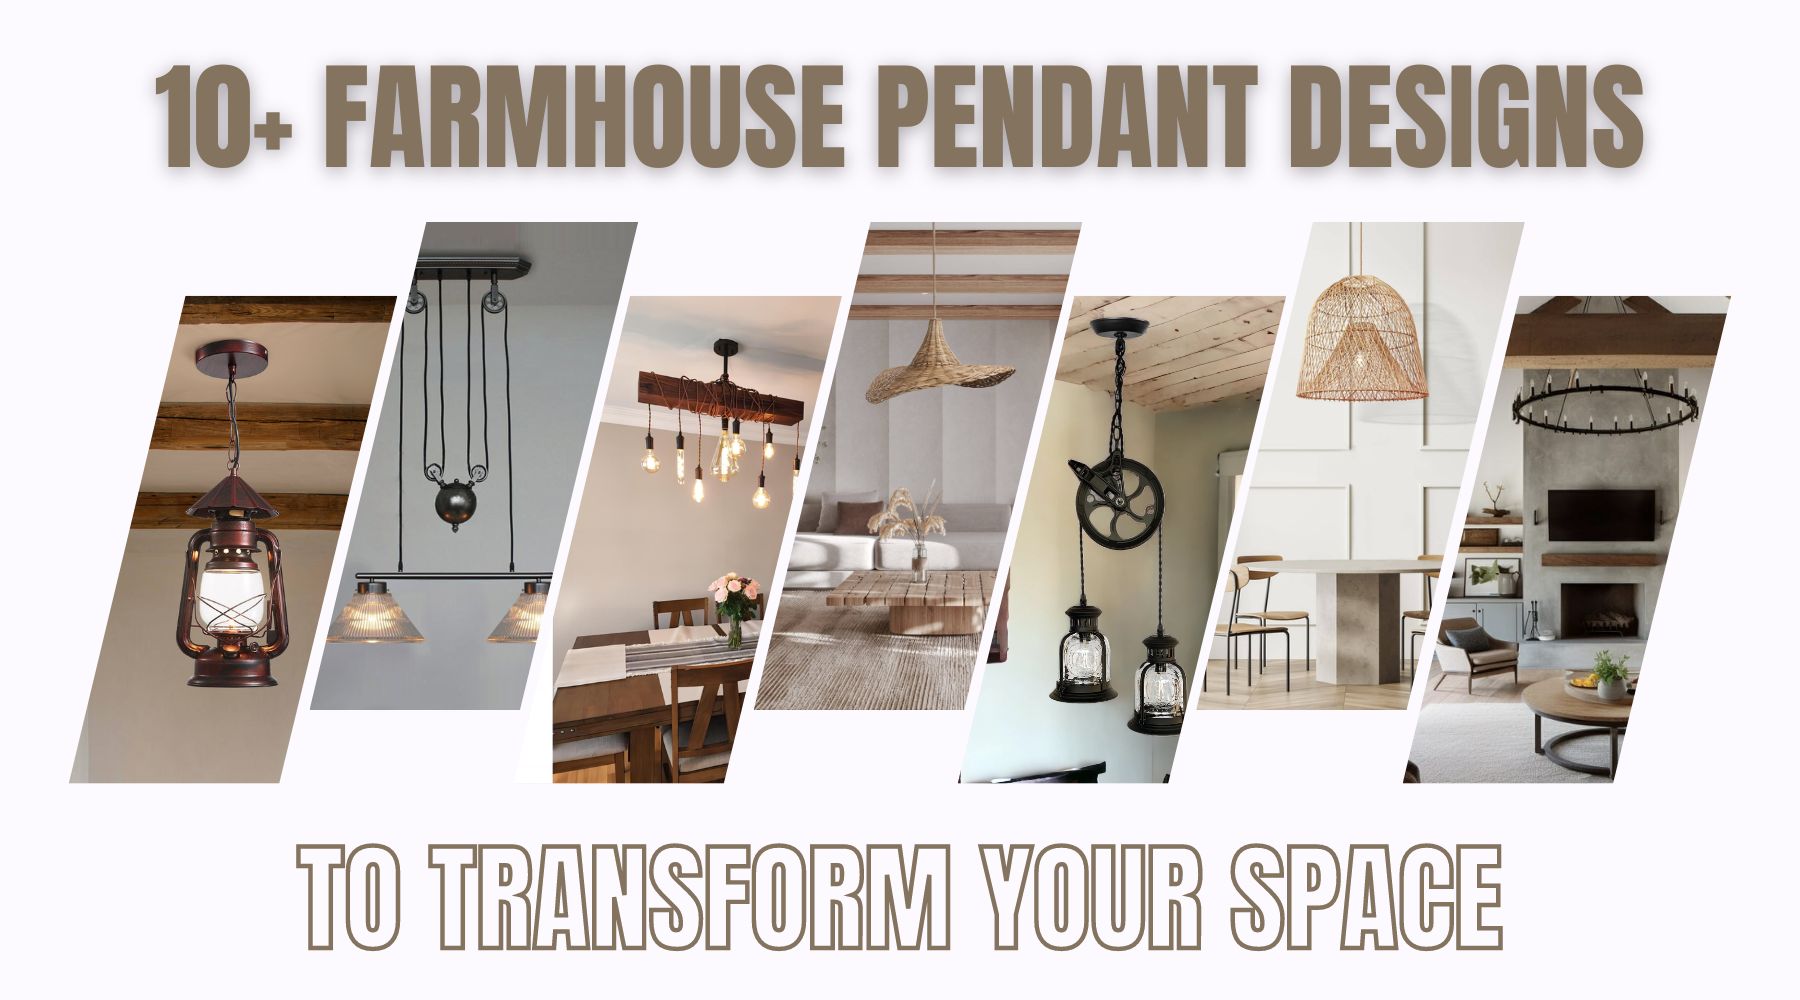 farmhouse pendant designs to transform your space